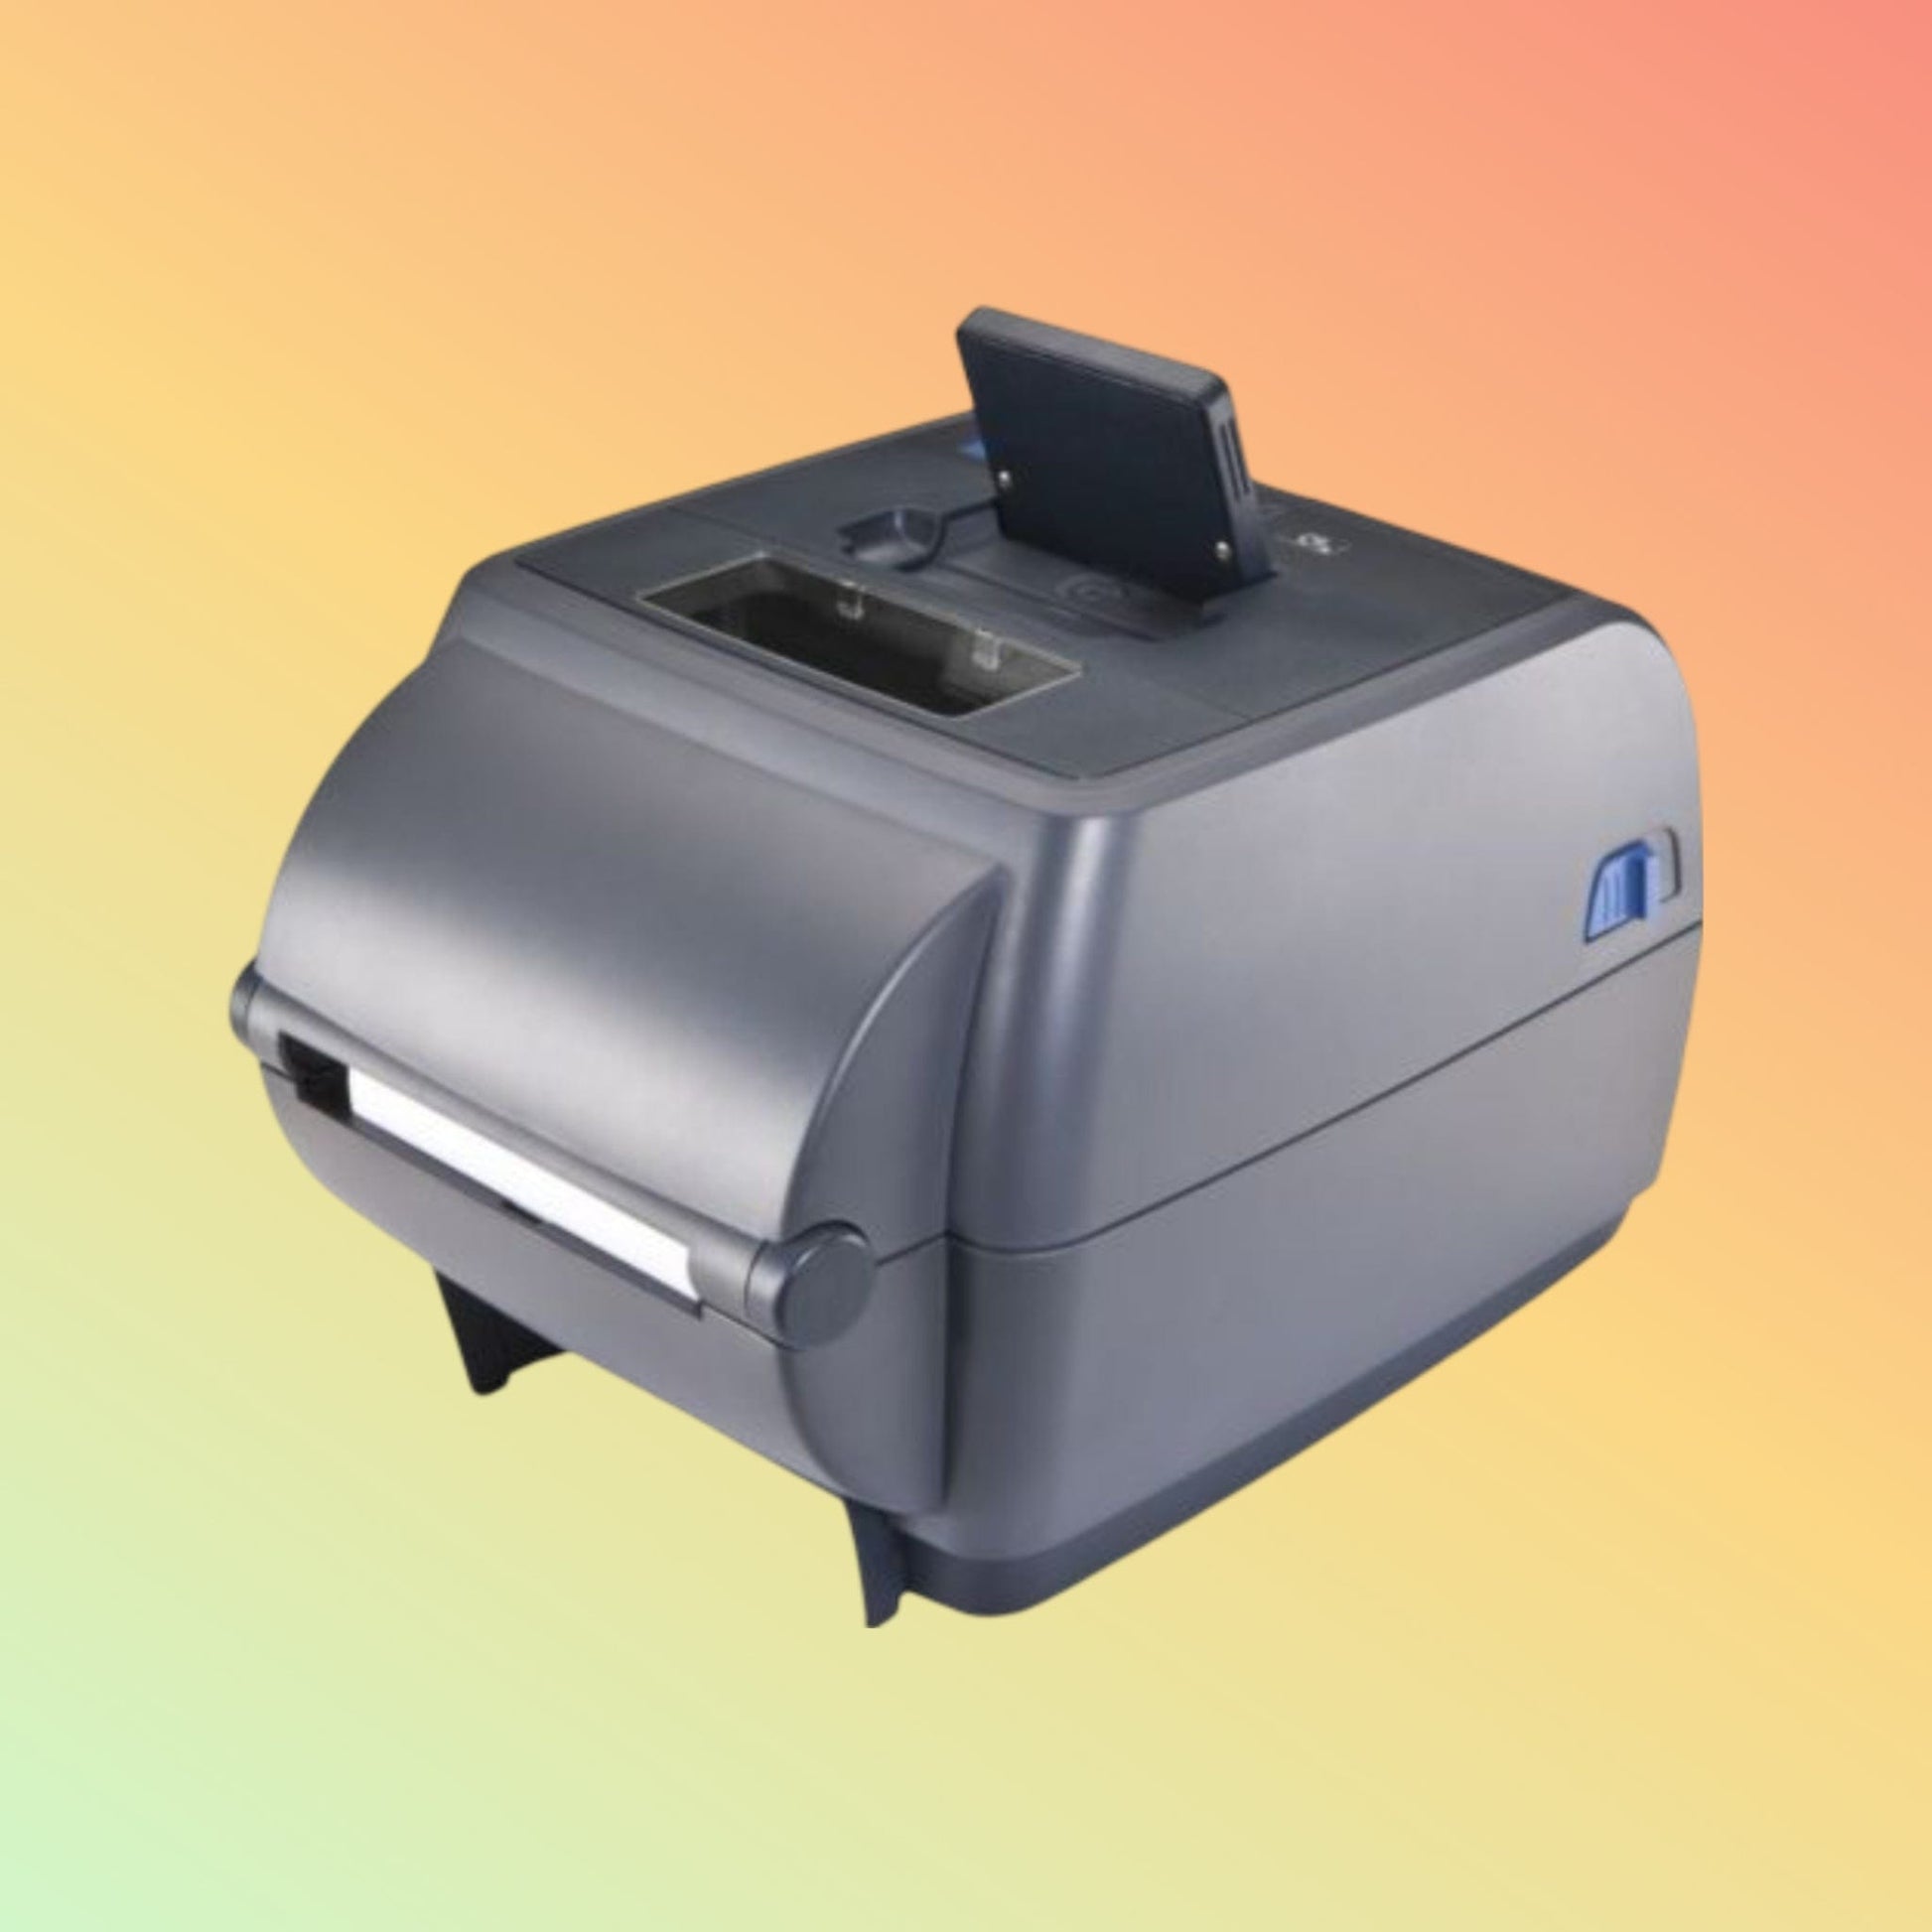 Intermac (Honeywell) PC43T Thermal Transfer Barcode Printer - Neotech